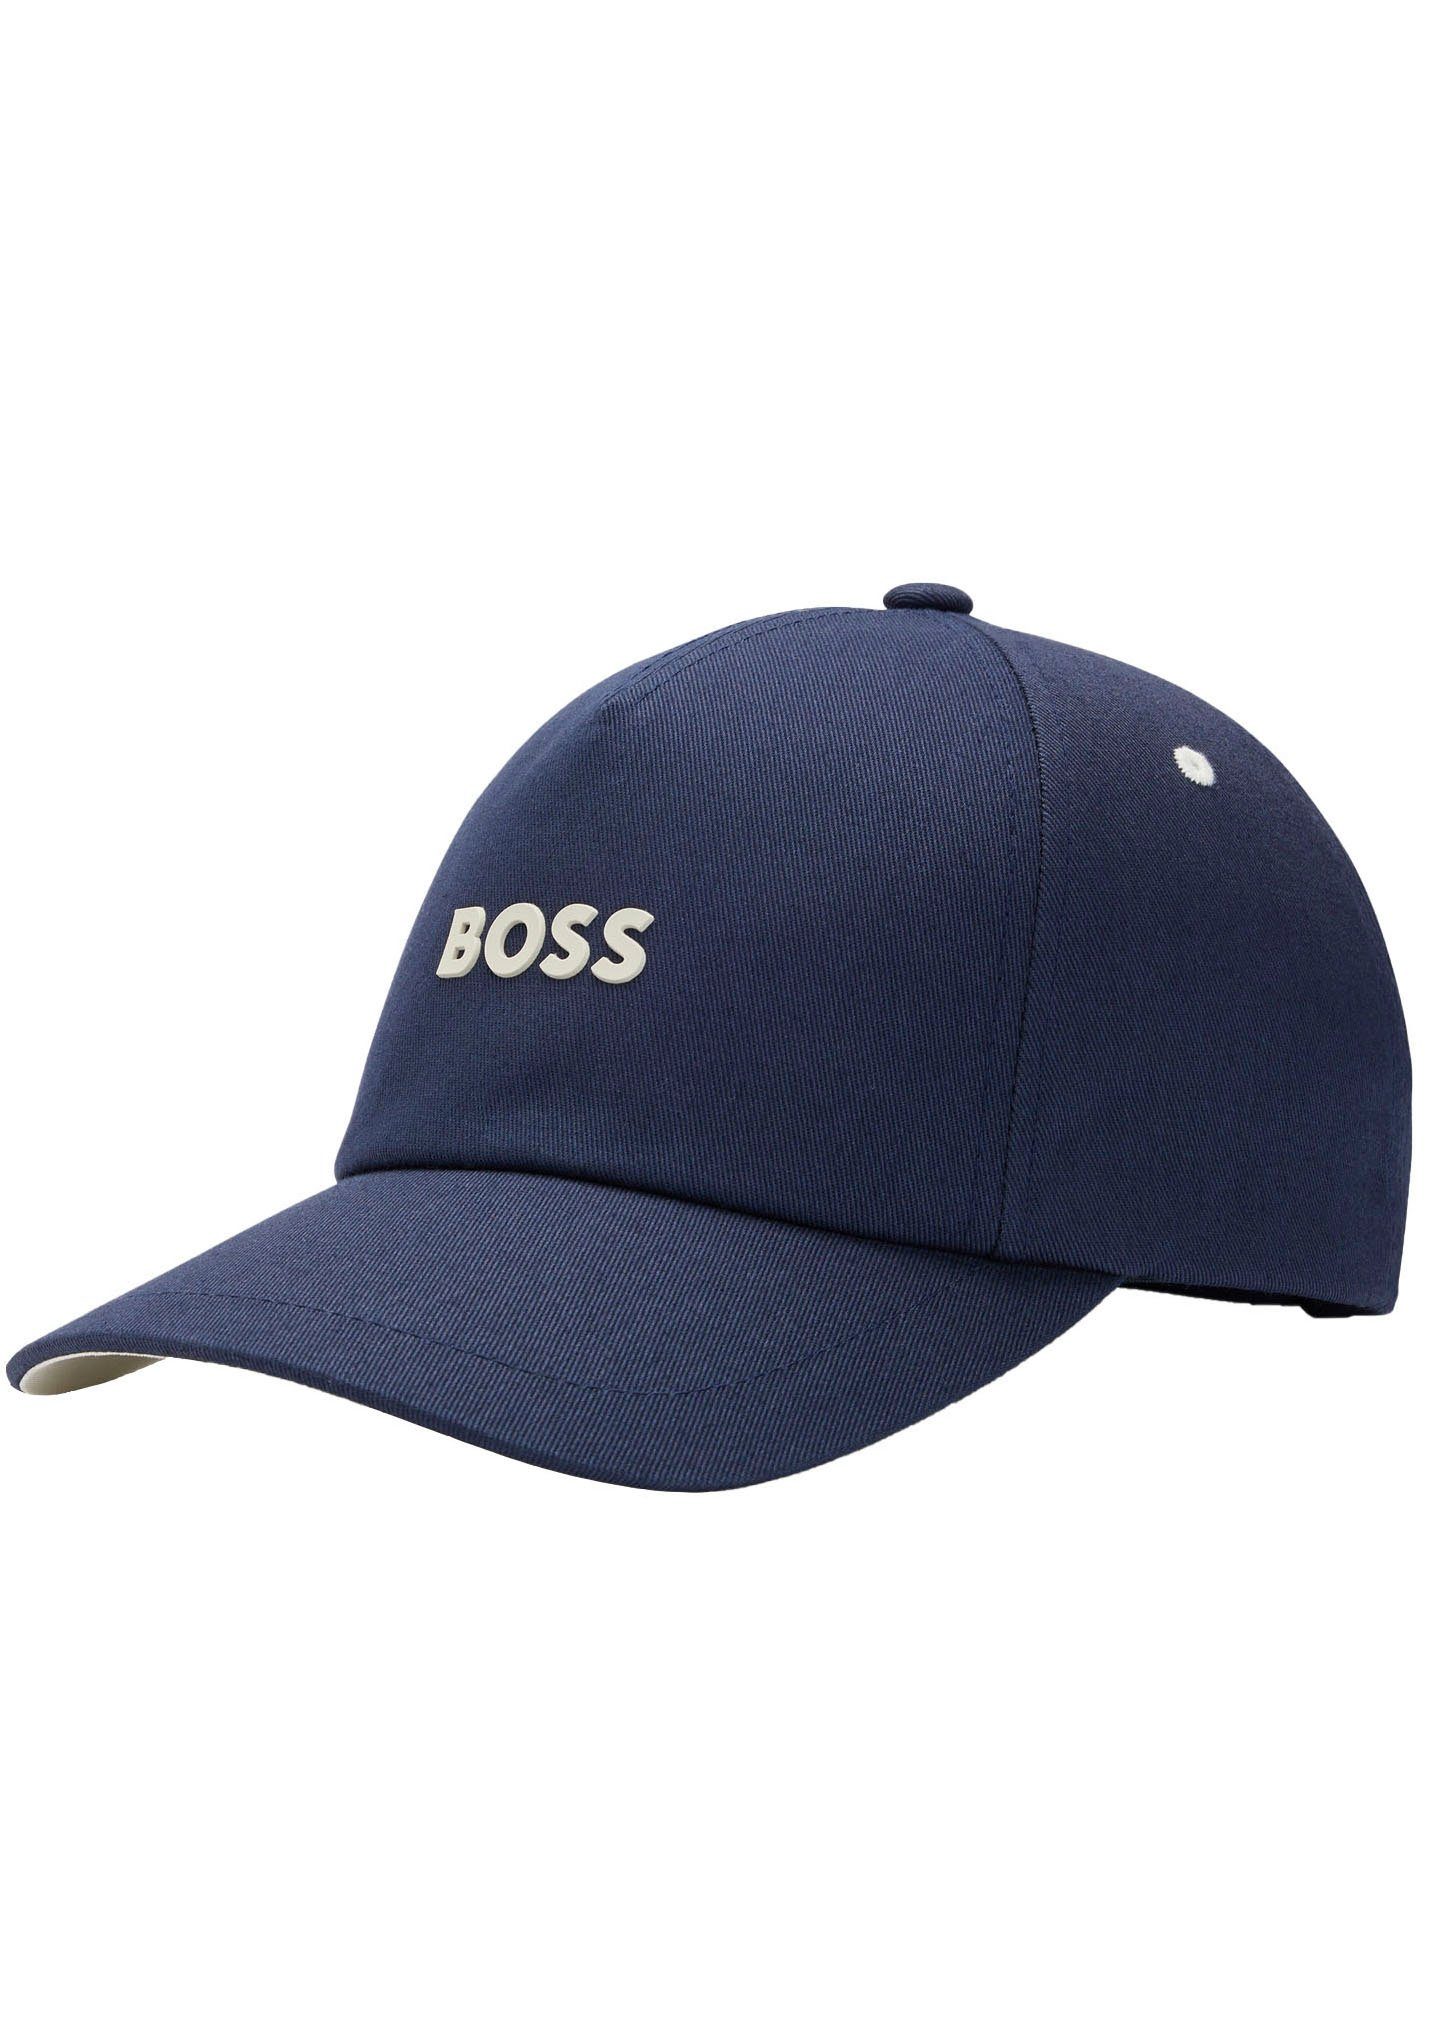 Cap BOSS mit Baseball Fresco-3 dark-Blue ORANGE Klettverschluss